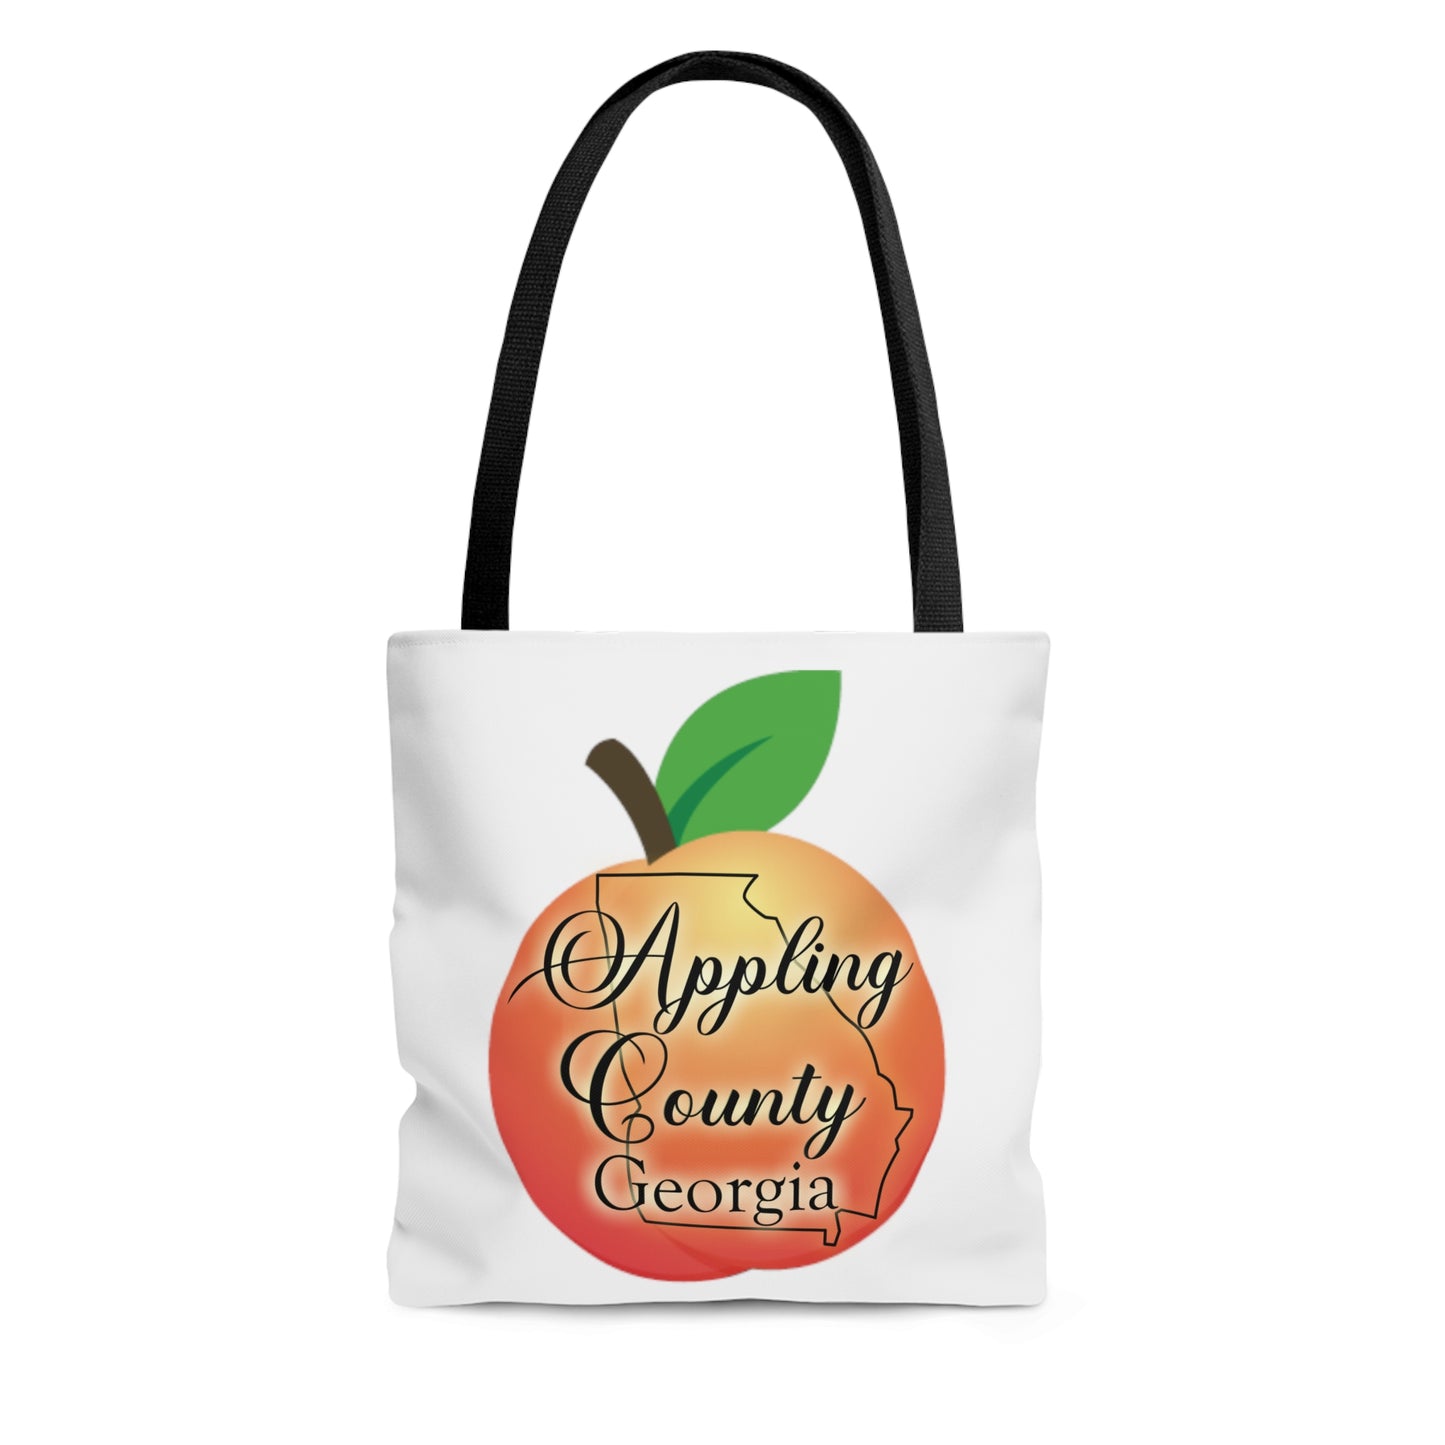 Appling County Georgia Tote Bag